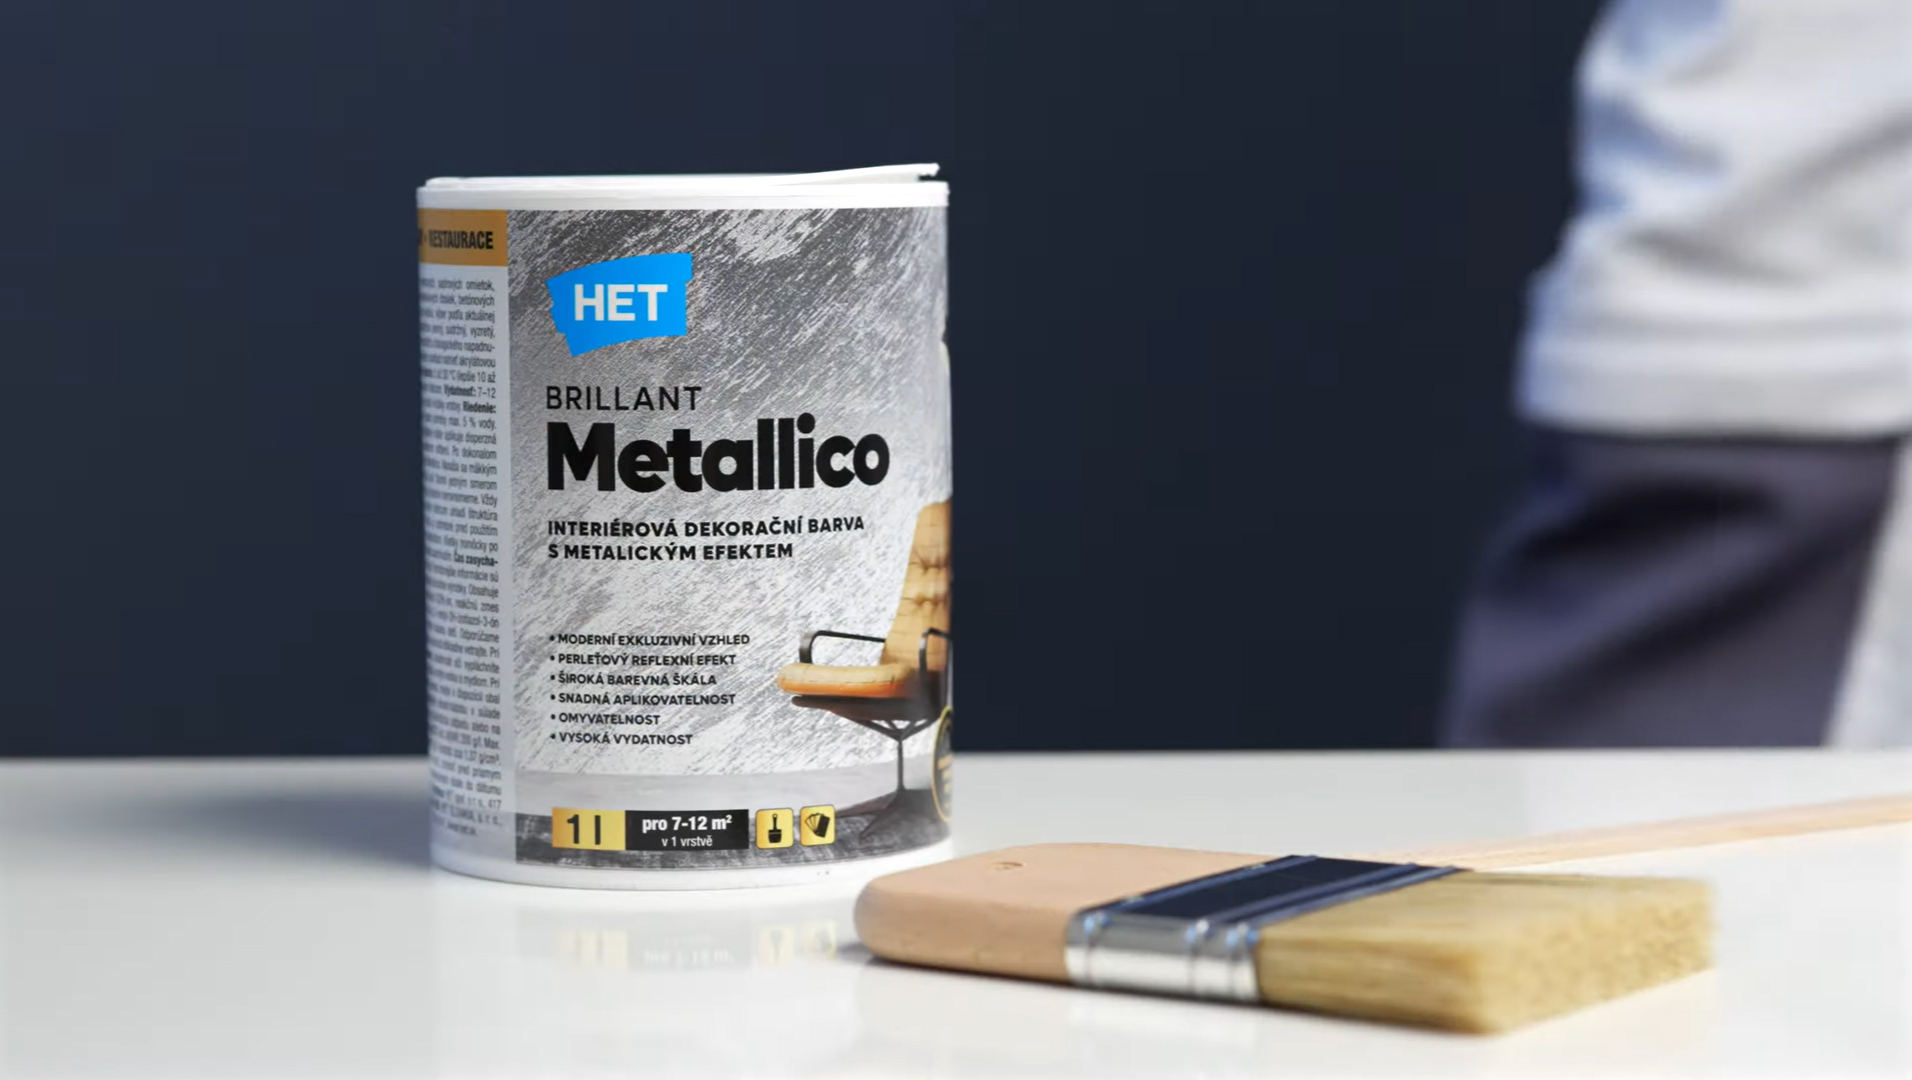 Brillant Metallico - aplikace dekorační interiérové barvy s metalickým efektem